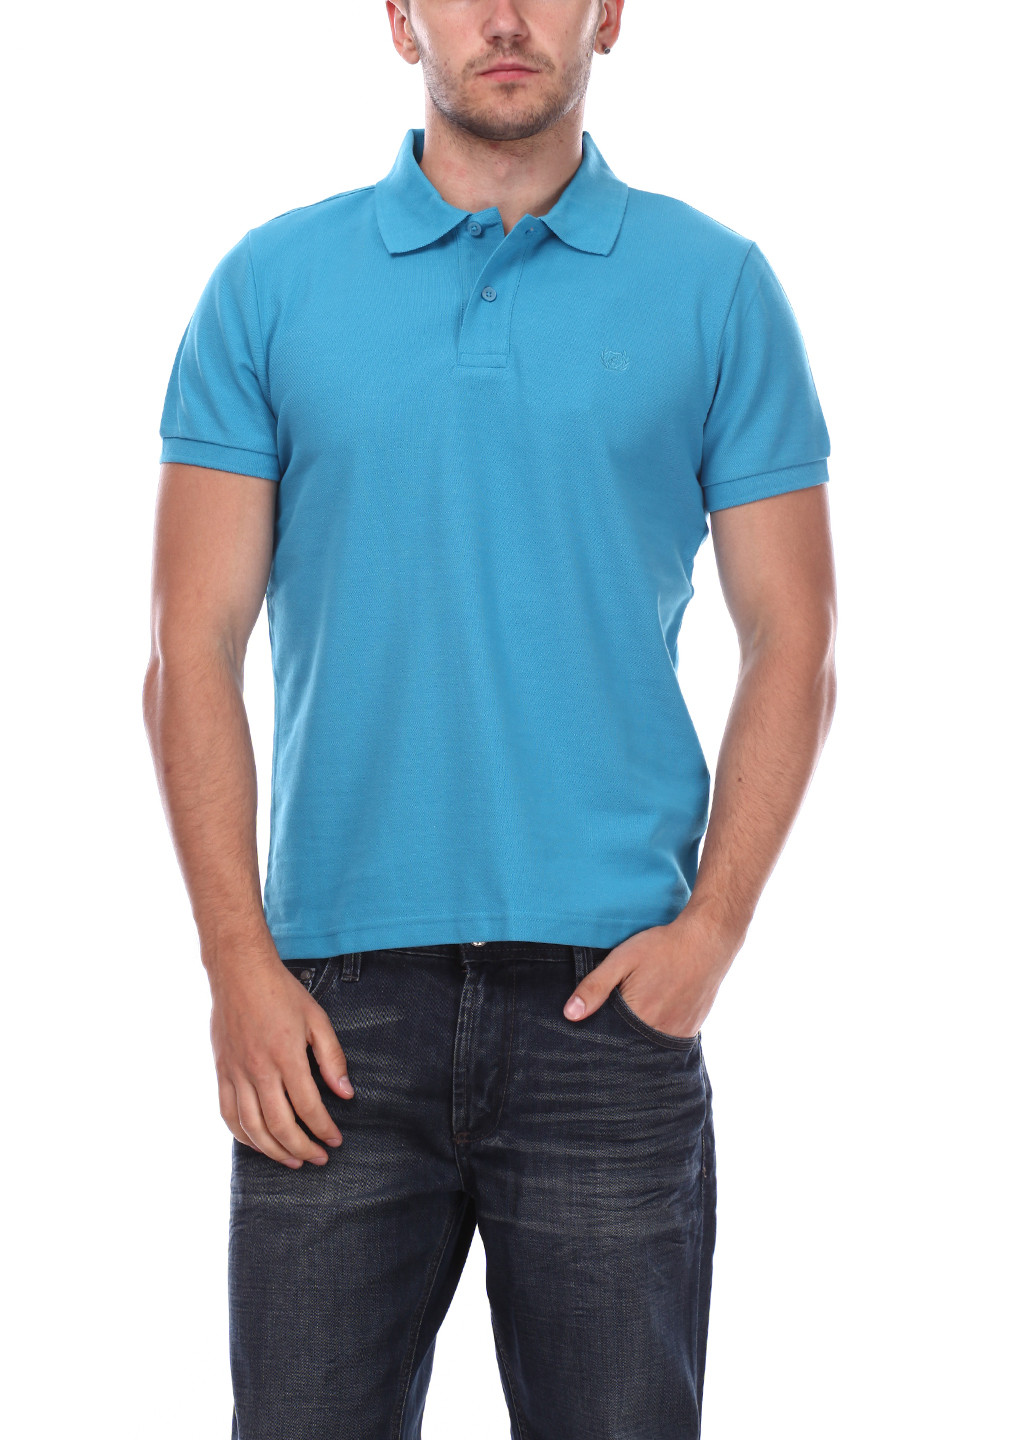 Голубой футболка-поло для мужчин Colin's